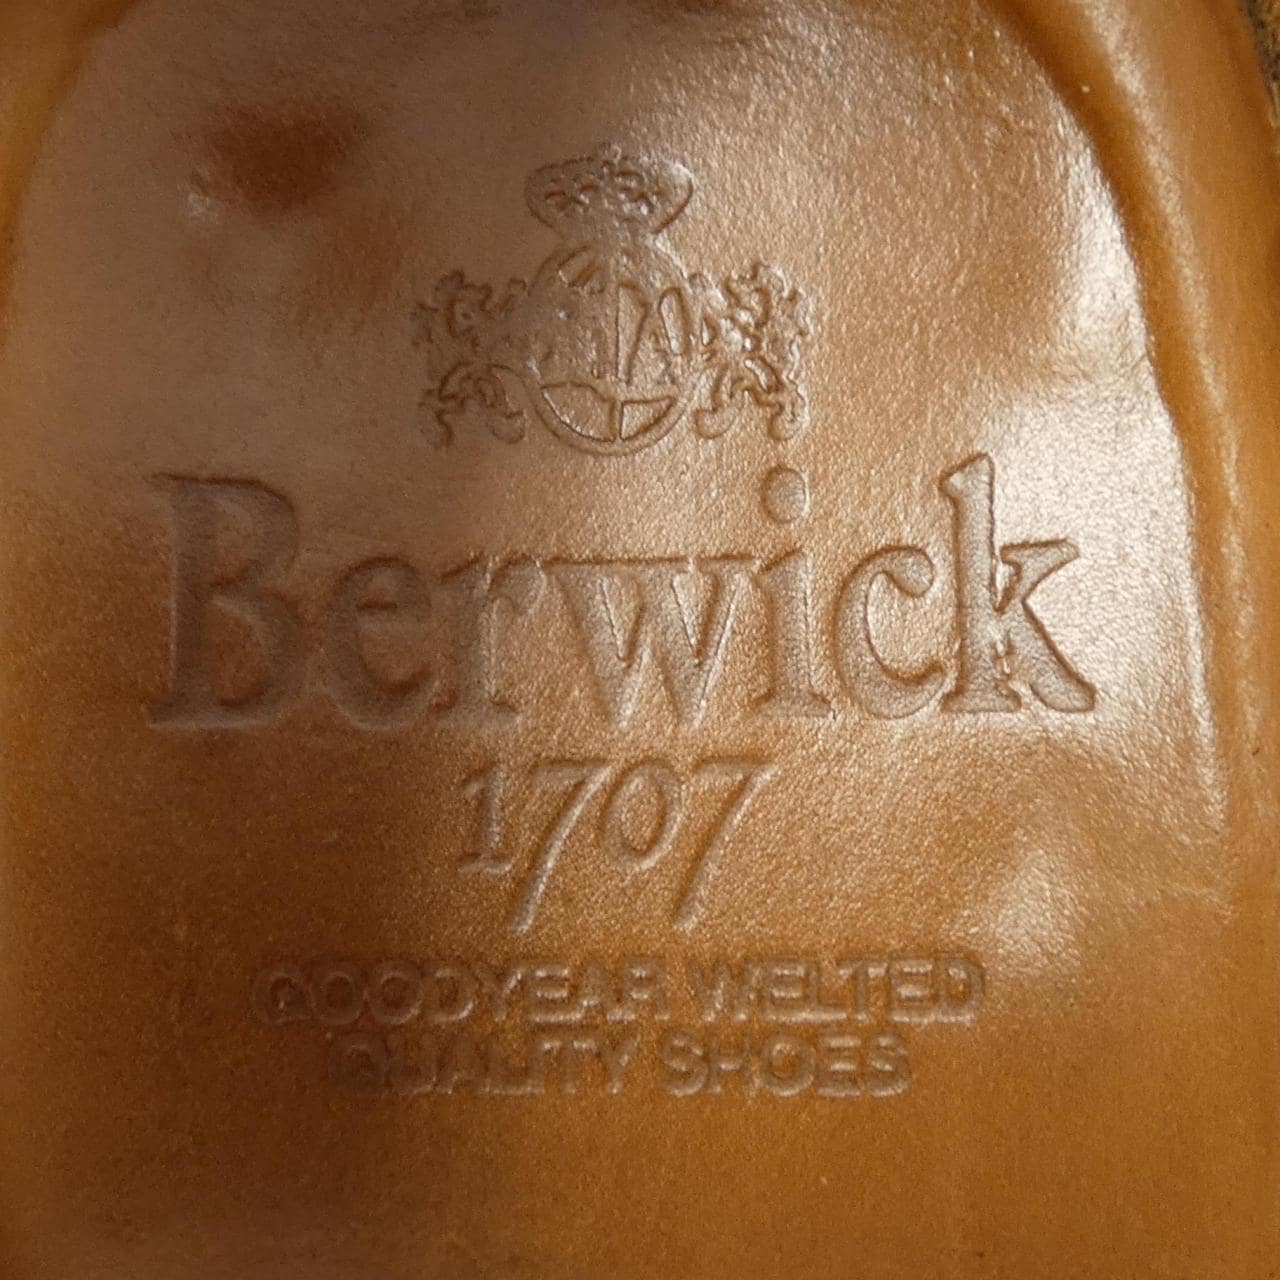 Berwick shoes